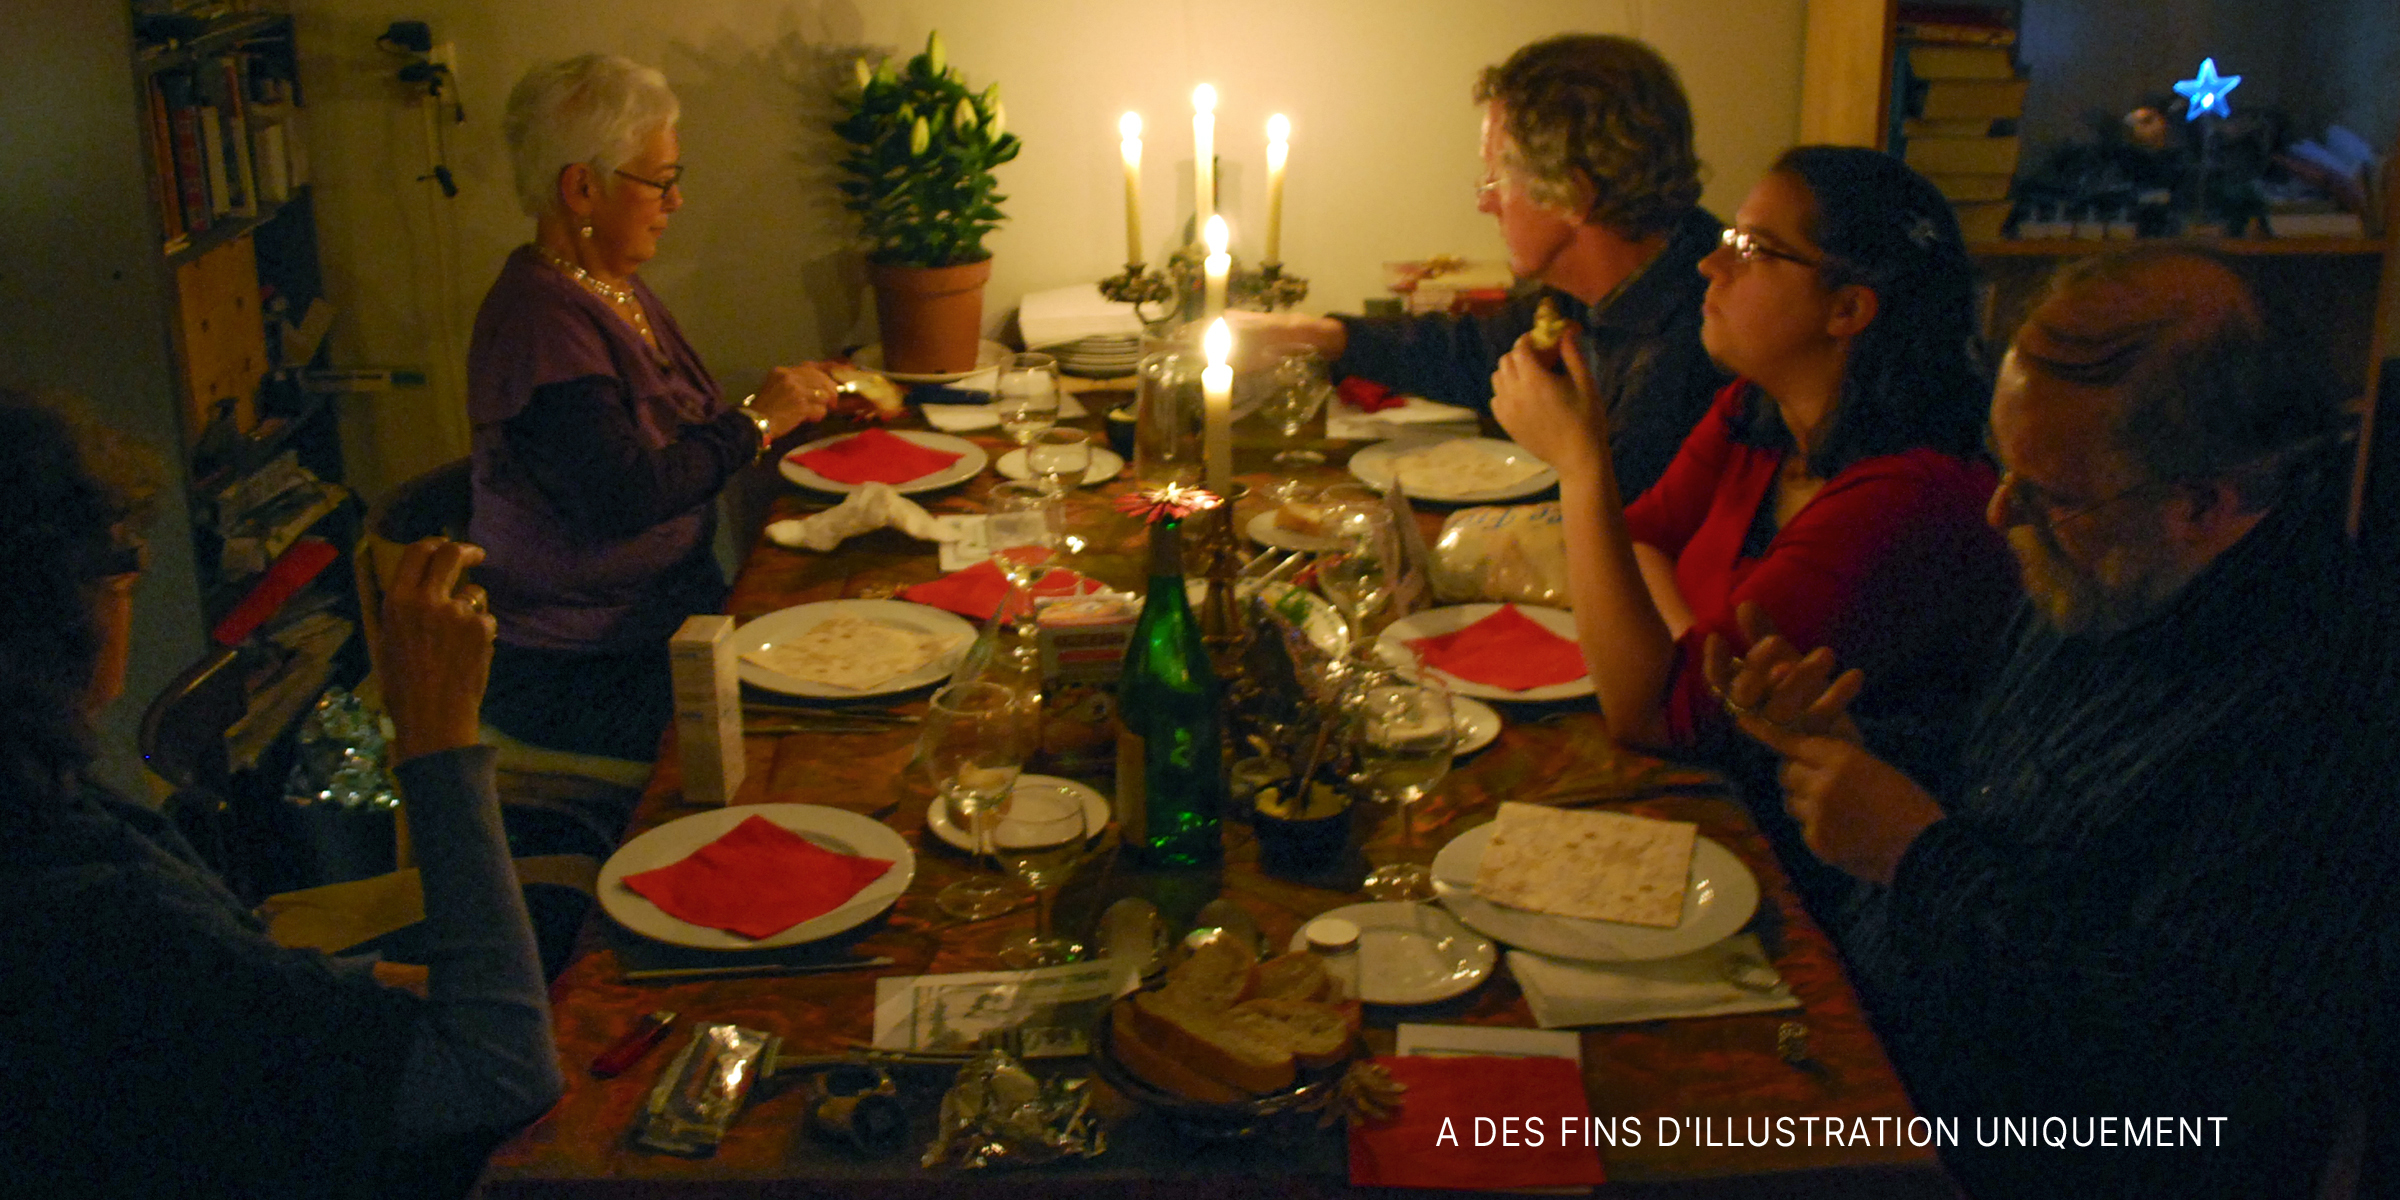 Membres de la famille prenant le repas de Noël | Source : Flickr.com/selmerv/CC BY 2.0